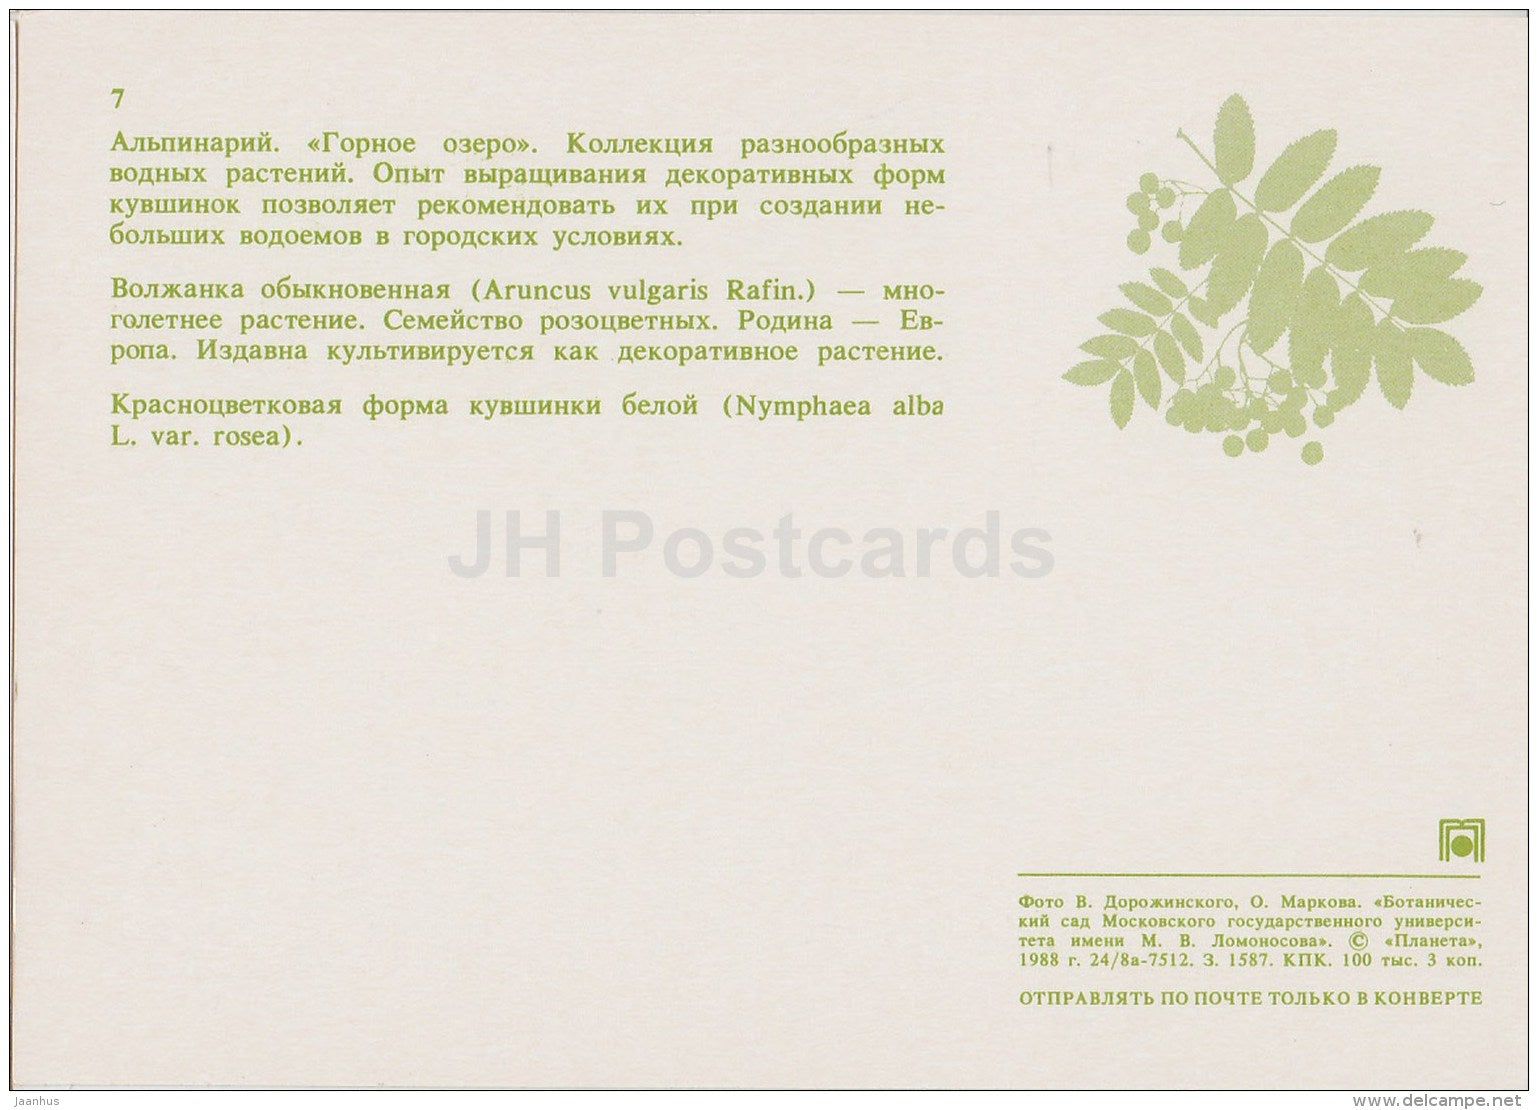 alpinarium - Aruncus dioicus - Water lily , Nymphaea - Moscow Botanical Garden - 1988 - Russia USSR - unused - JH Postcards